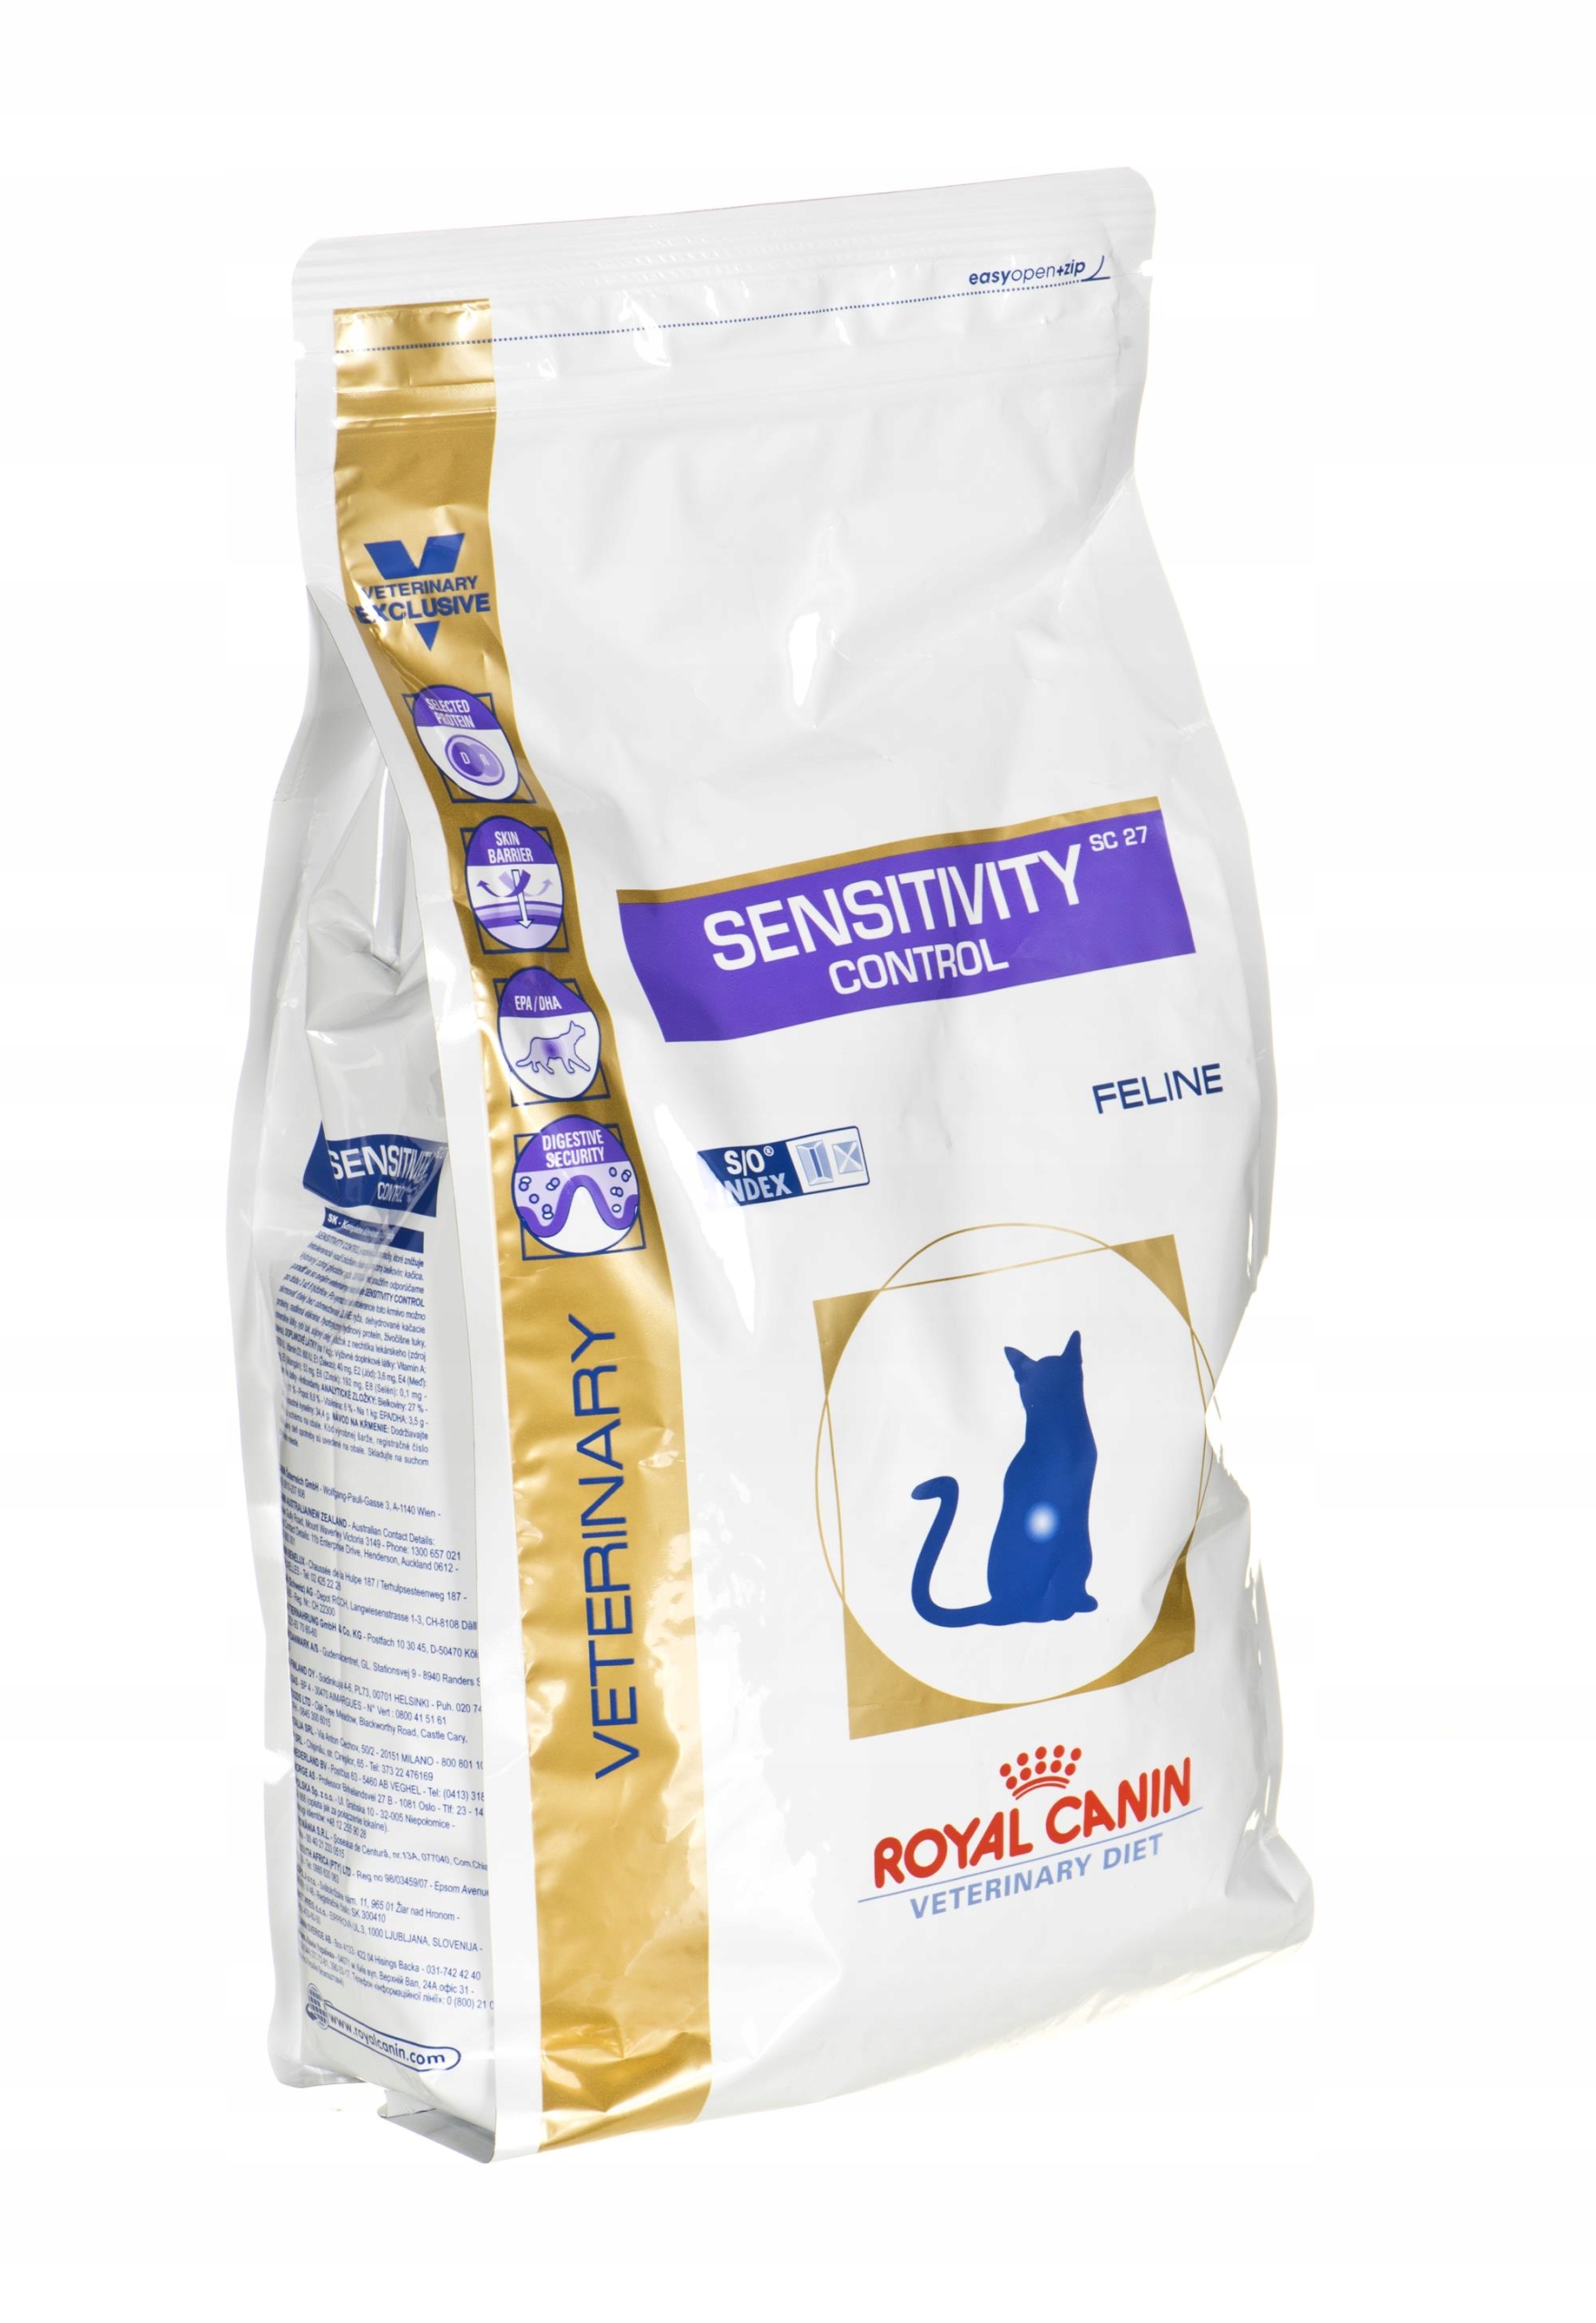 Sensitivity control. Роял Канин sensitivity Control. Royal Canin sensitivity Control. Royal Canin sensitivity Control Cat. Sensitive Control Royal Canin для кошек.